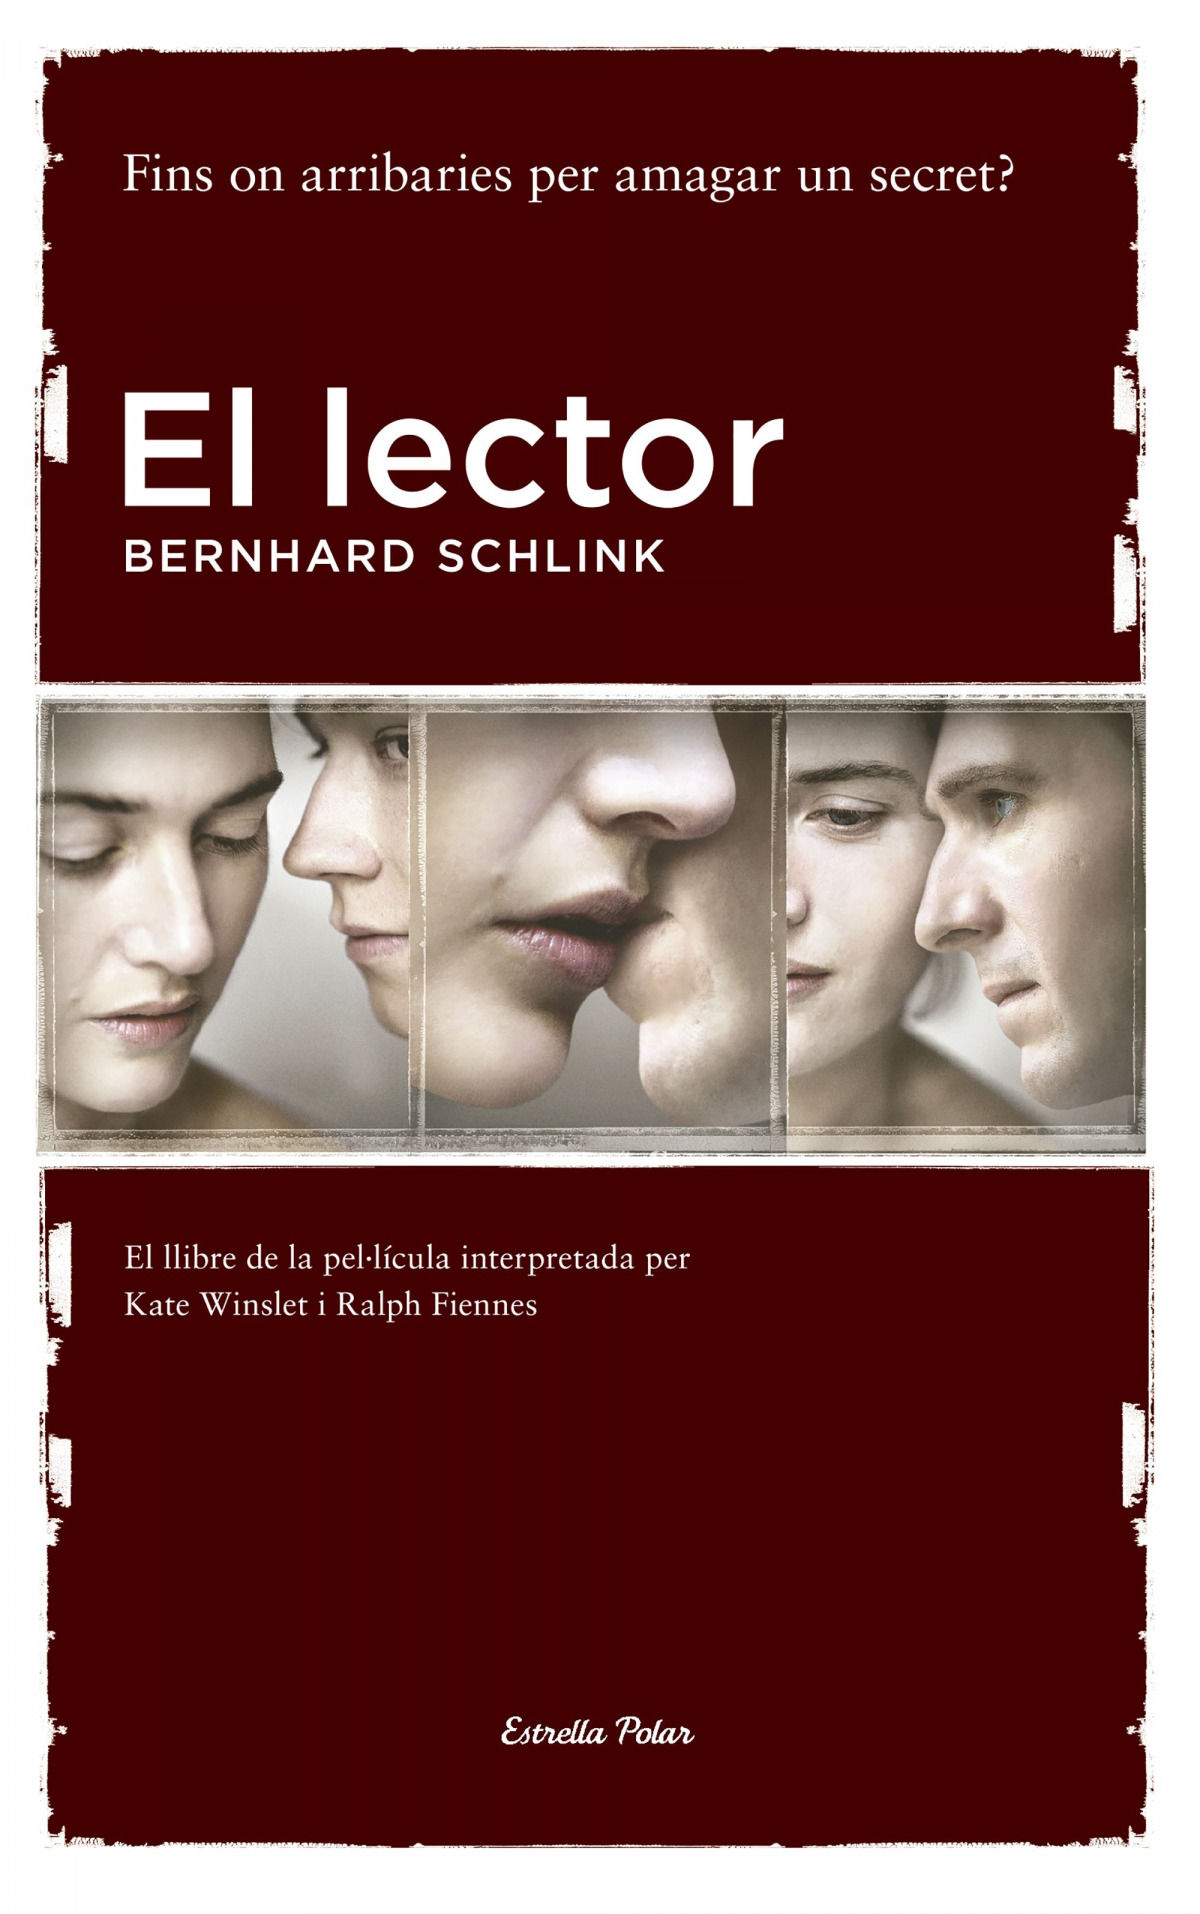 El lector - Bernhard Schlink